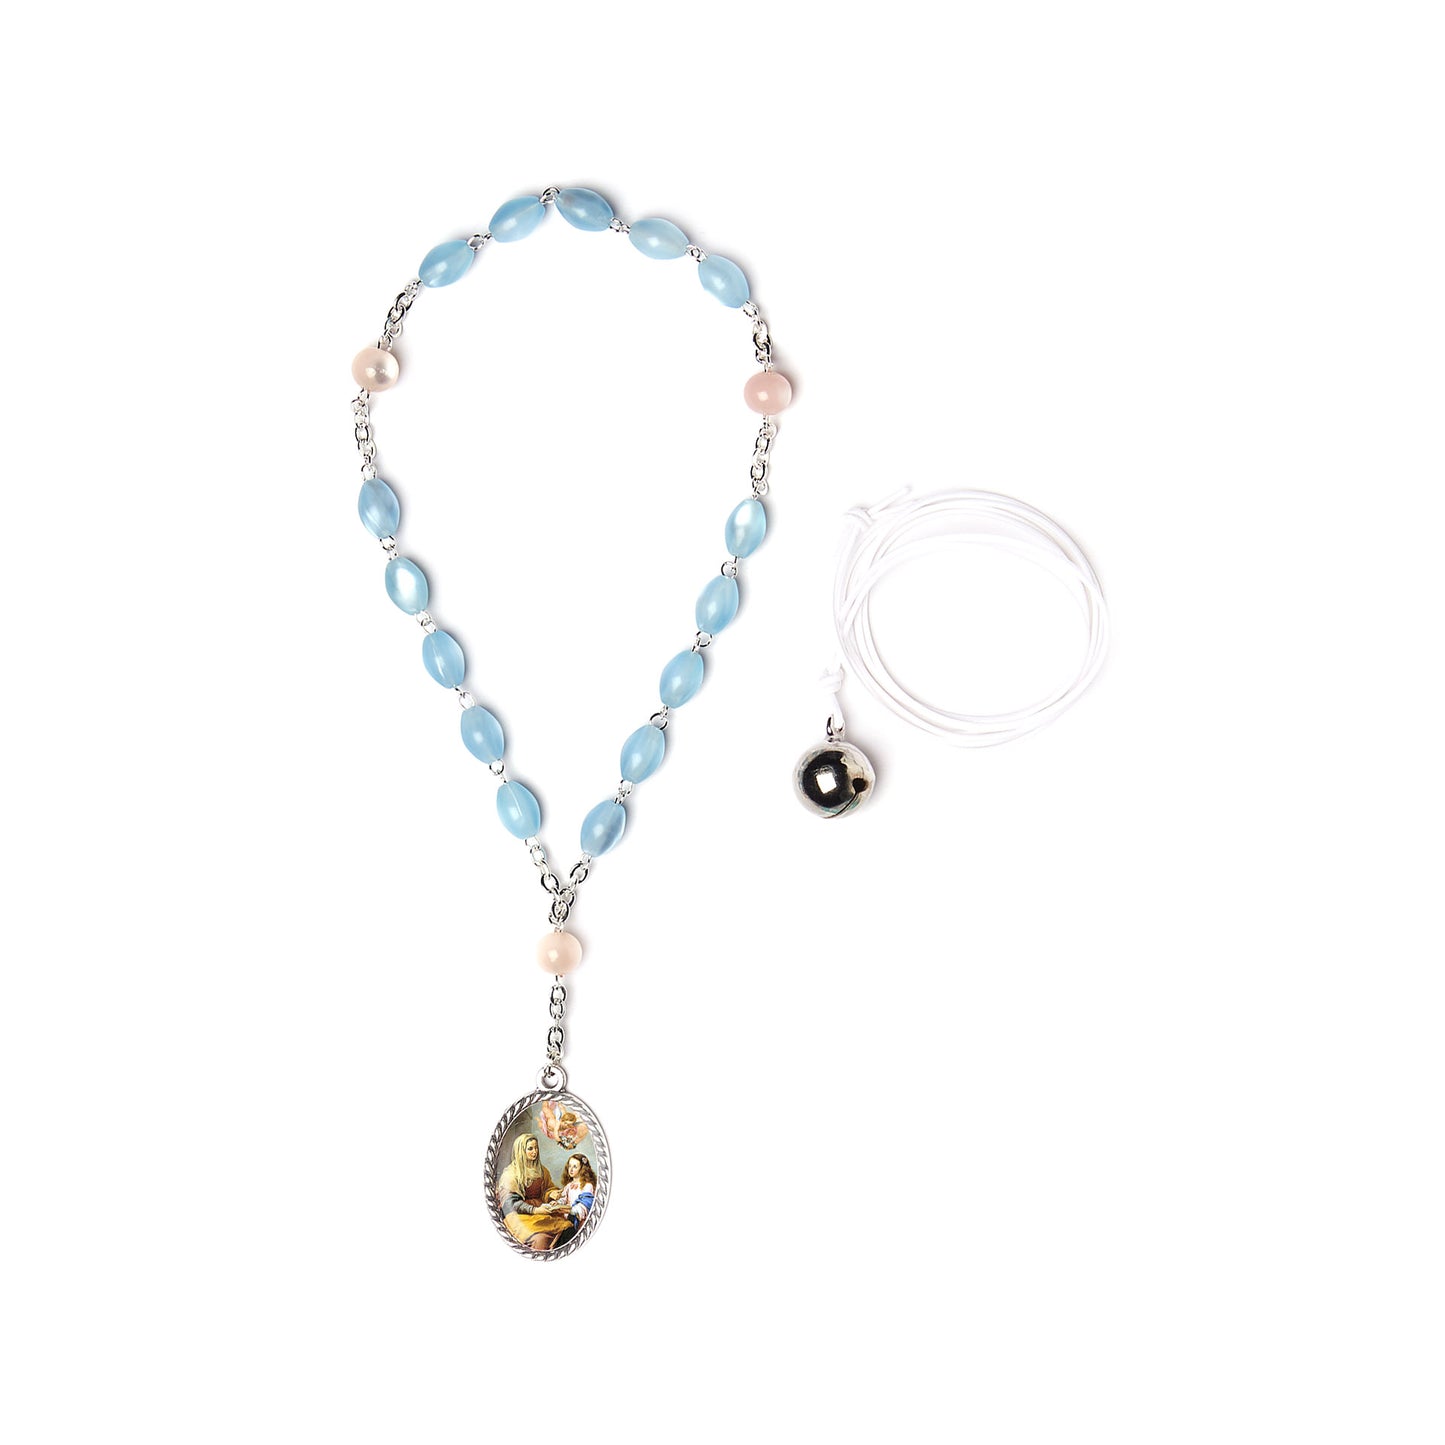 Santa Ana Rosary with Imitation Mother of Pearl Beads